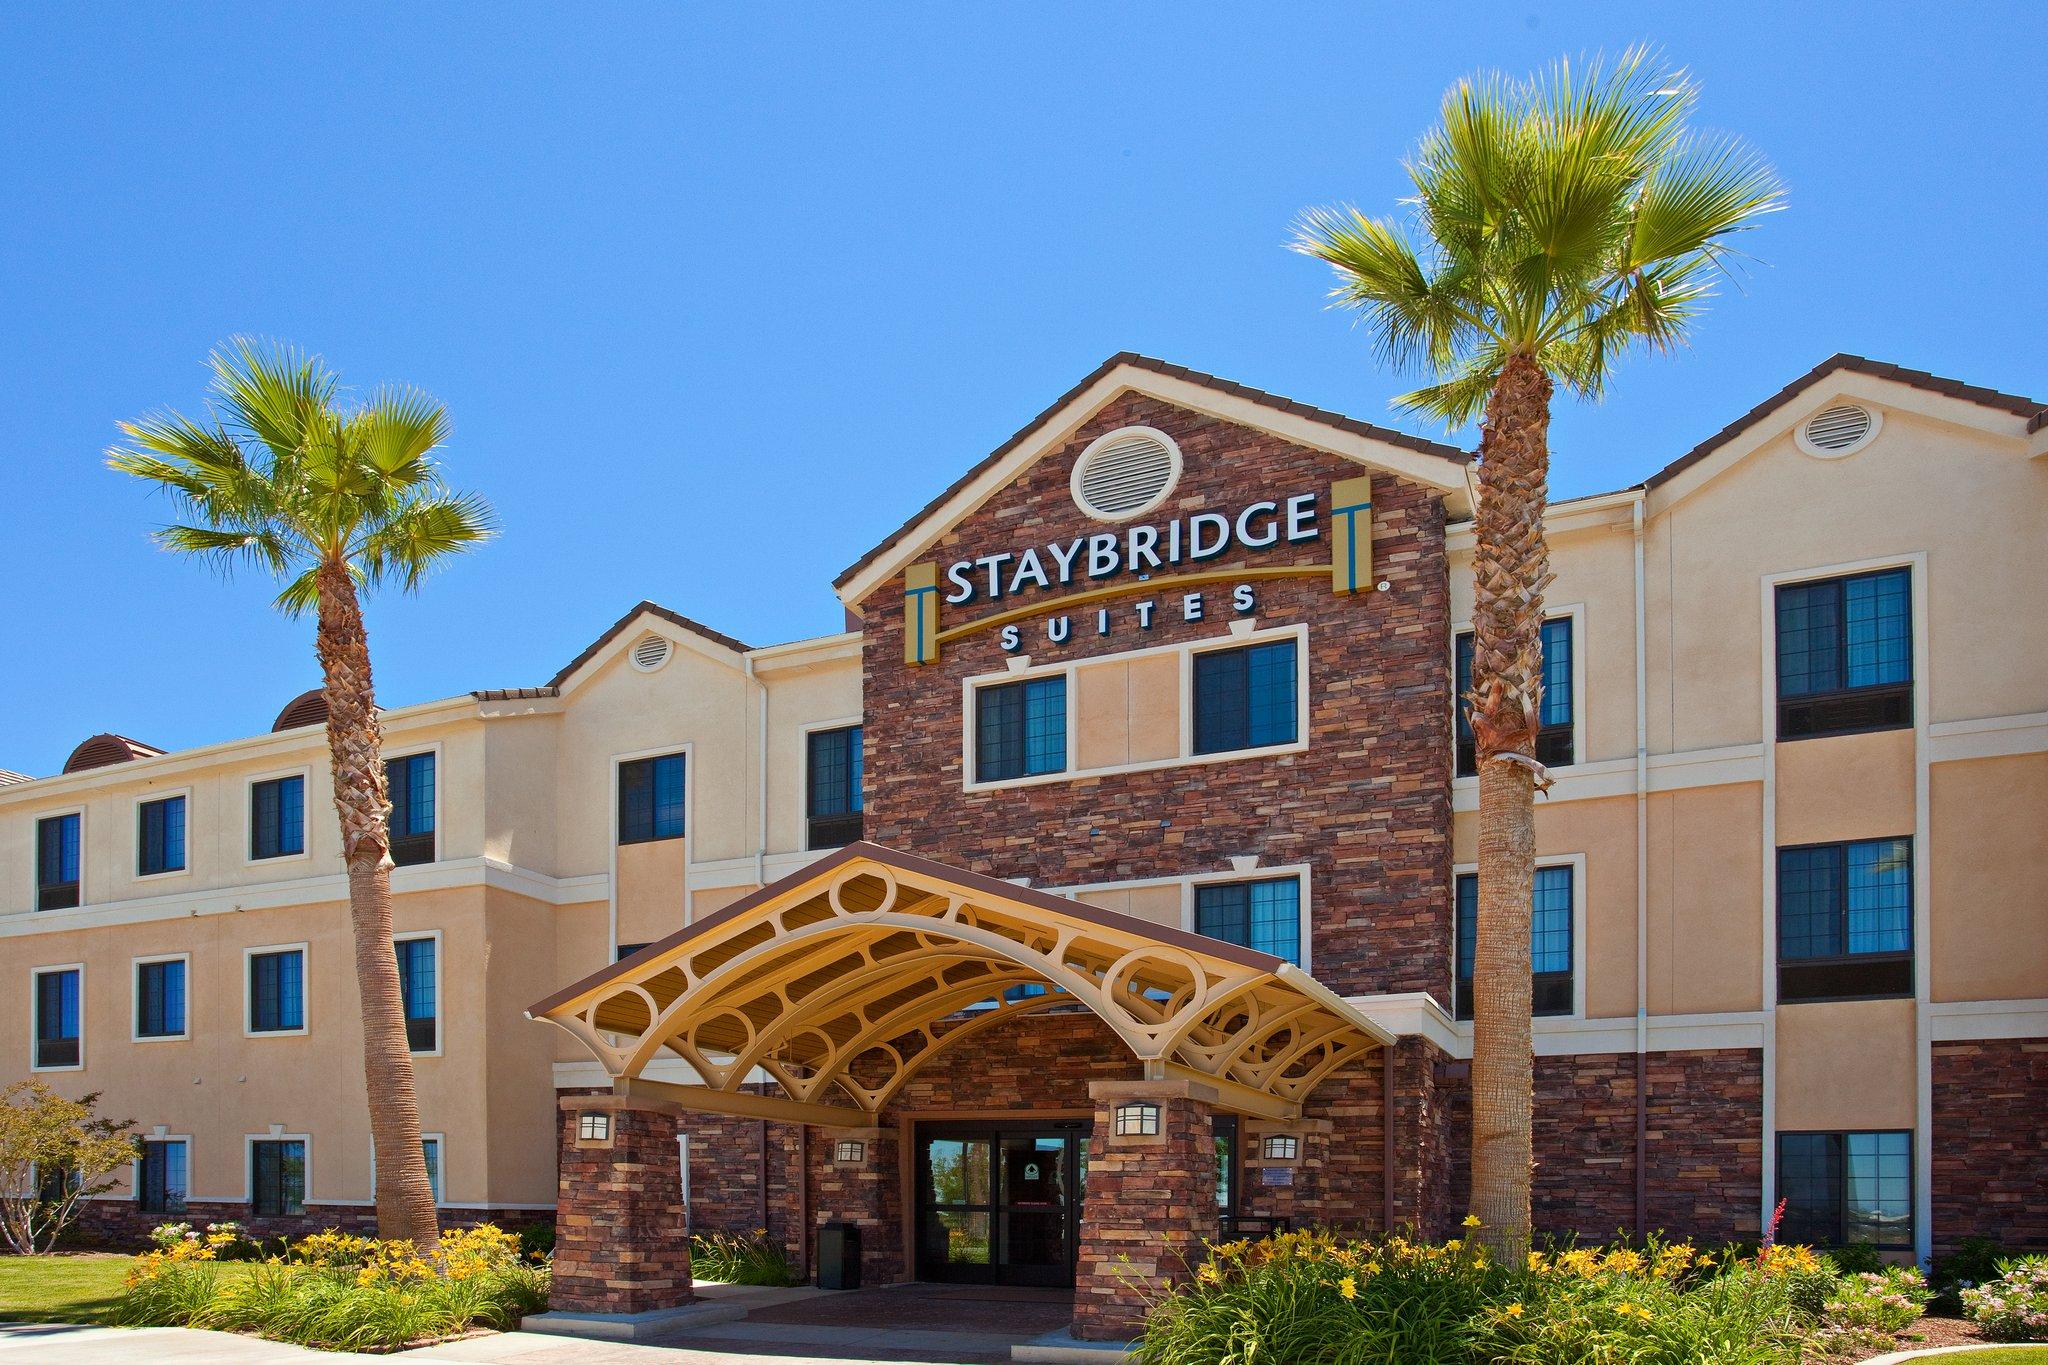 Staybridge Suites Palmdale in Palmdale, CA